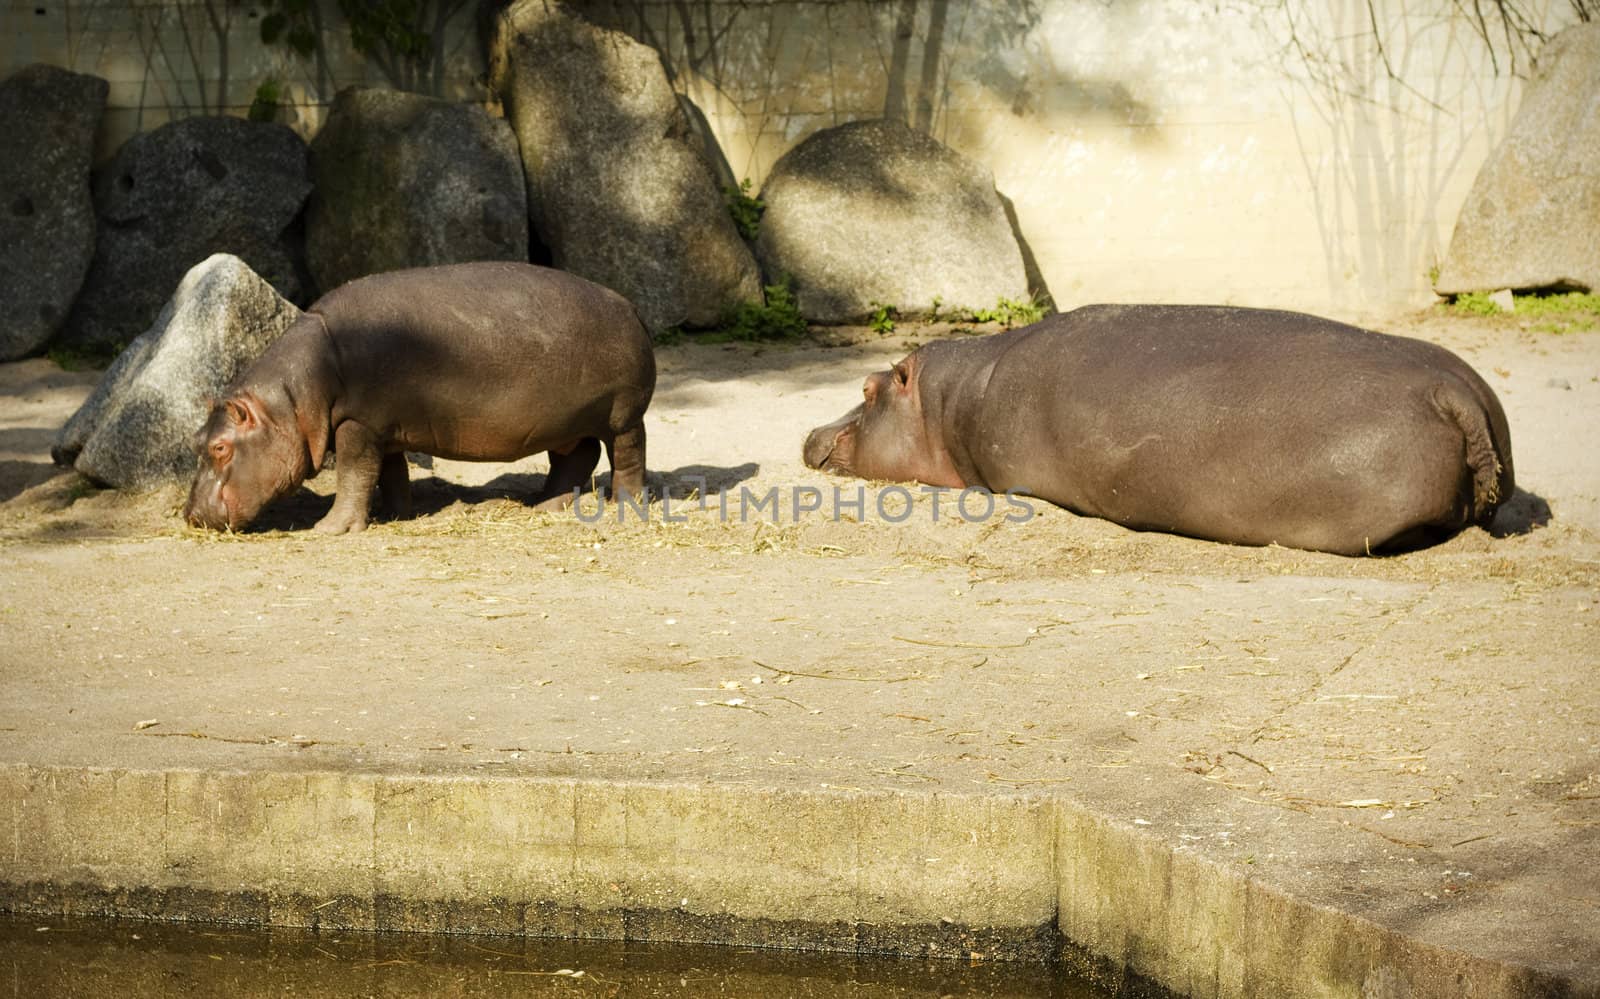 Hippopotamus family in a zoo